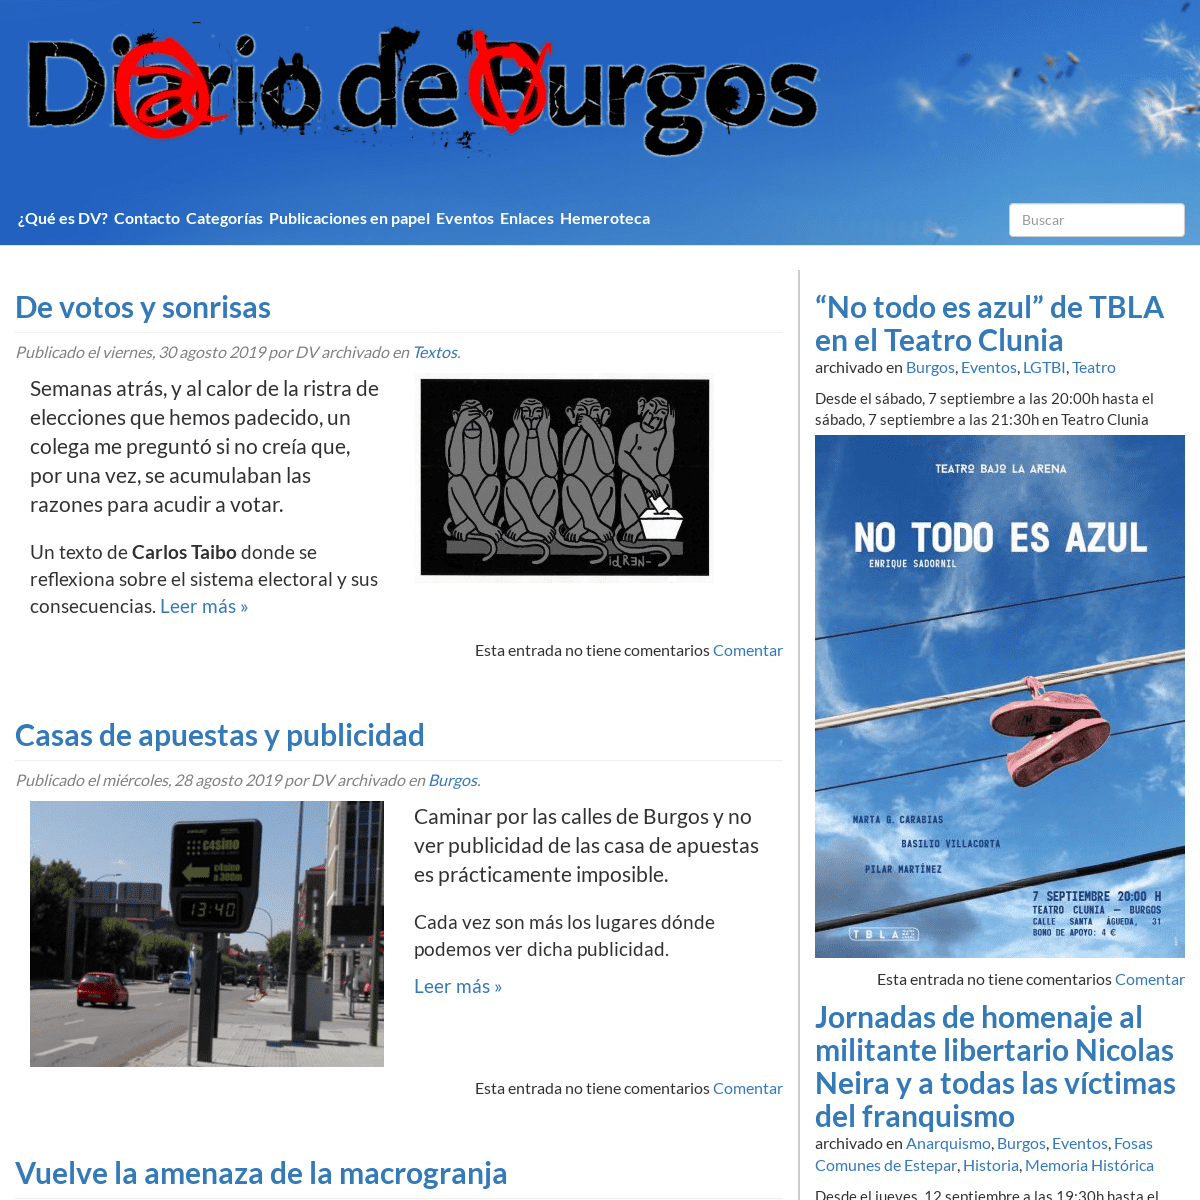 A complete backup of diariodevurgos.com